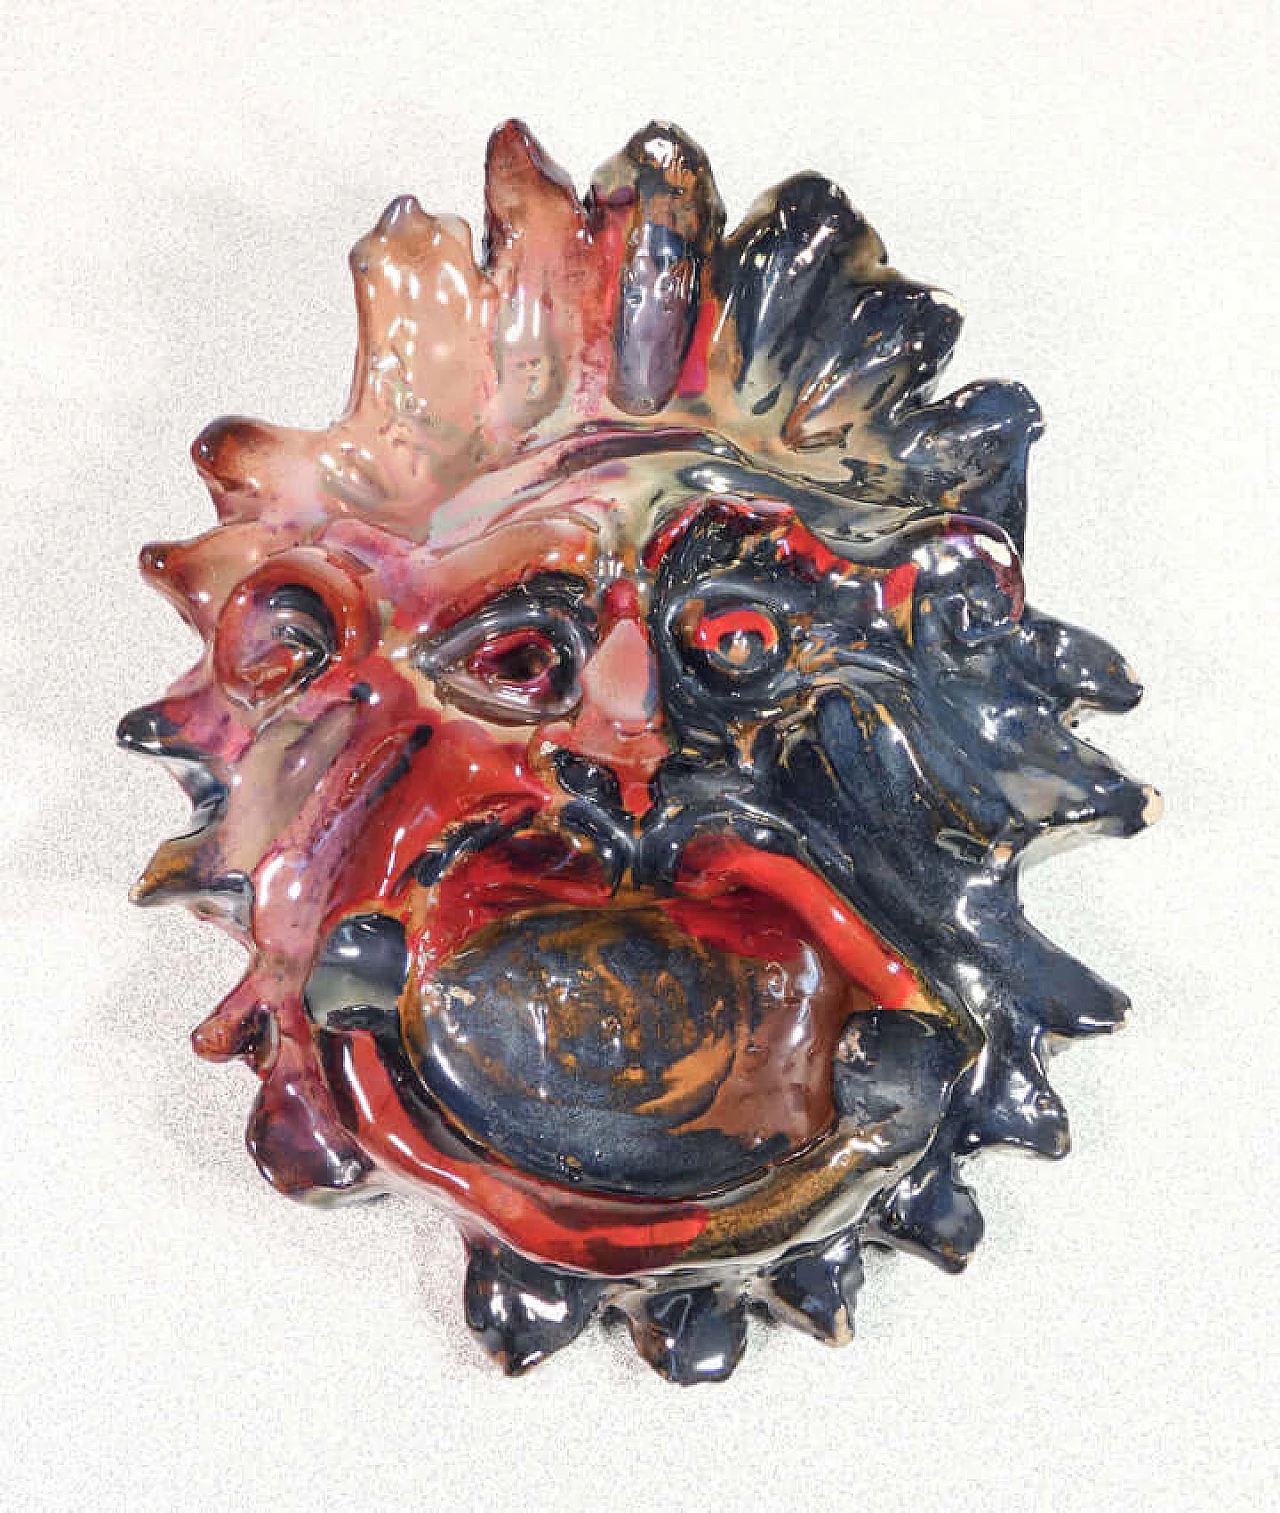 Ceramic mask ashtray by Torido Mazzotti for M.G.A. 2